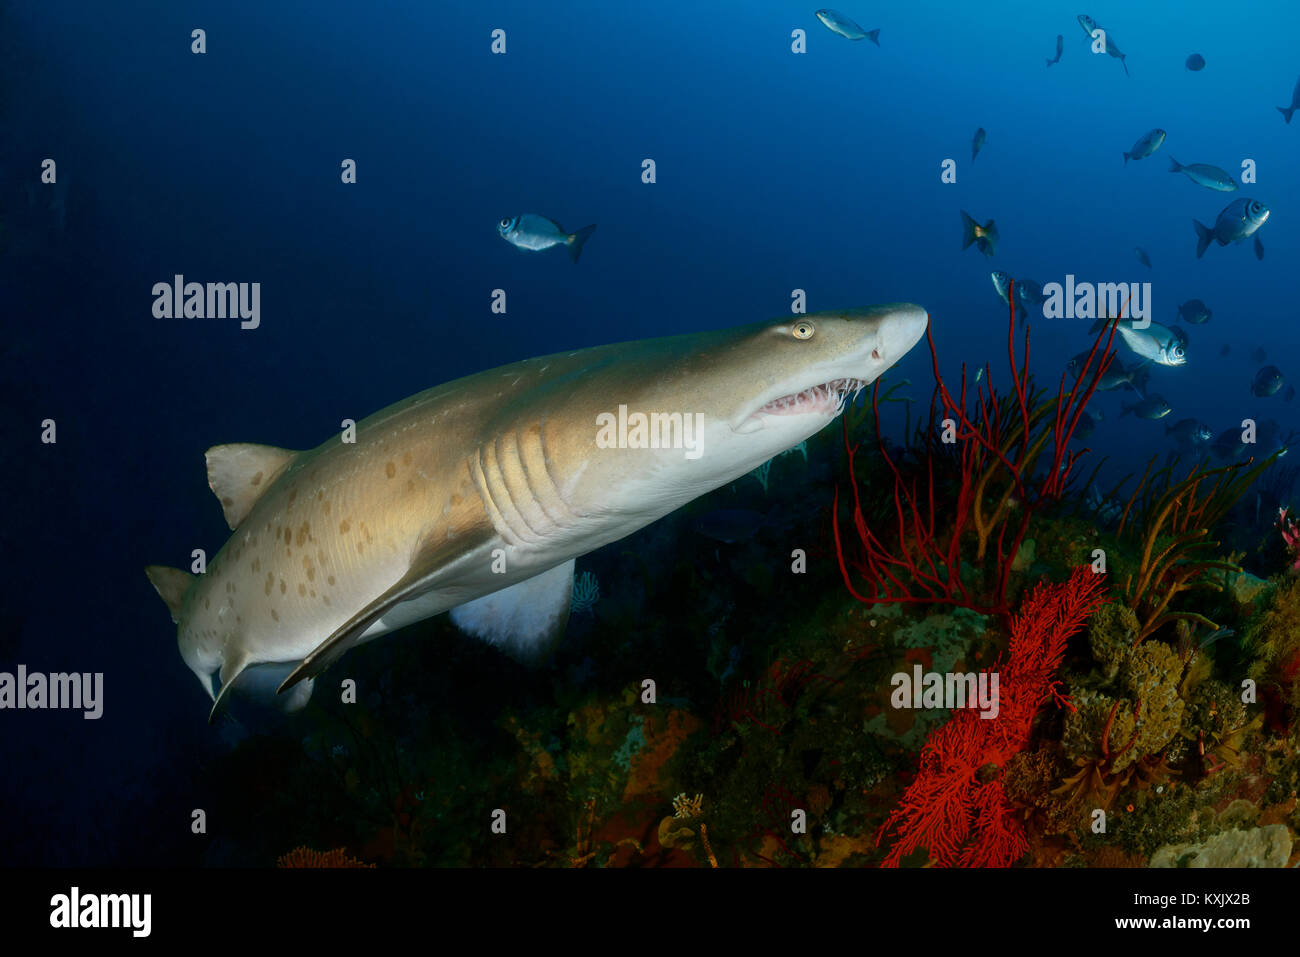 Sand tiger shark or Raggedthoothed Shark, Carcharias taurus, Porth Elizabeth, Algoa Bay, Nelson Mandela Bay, South Africa, Indian Ocean Stock Photo